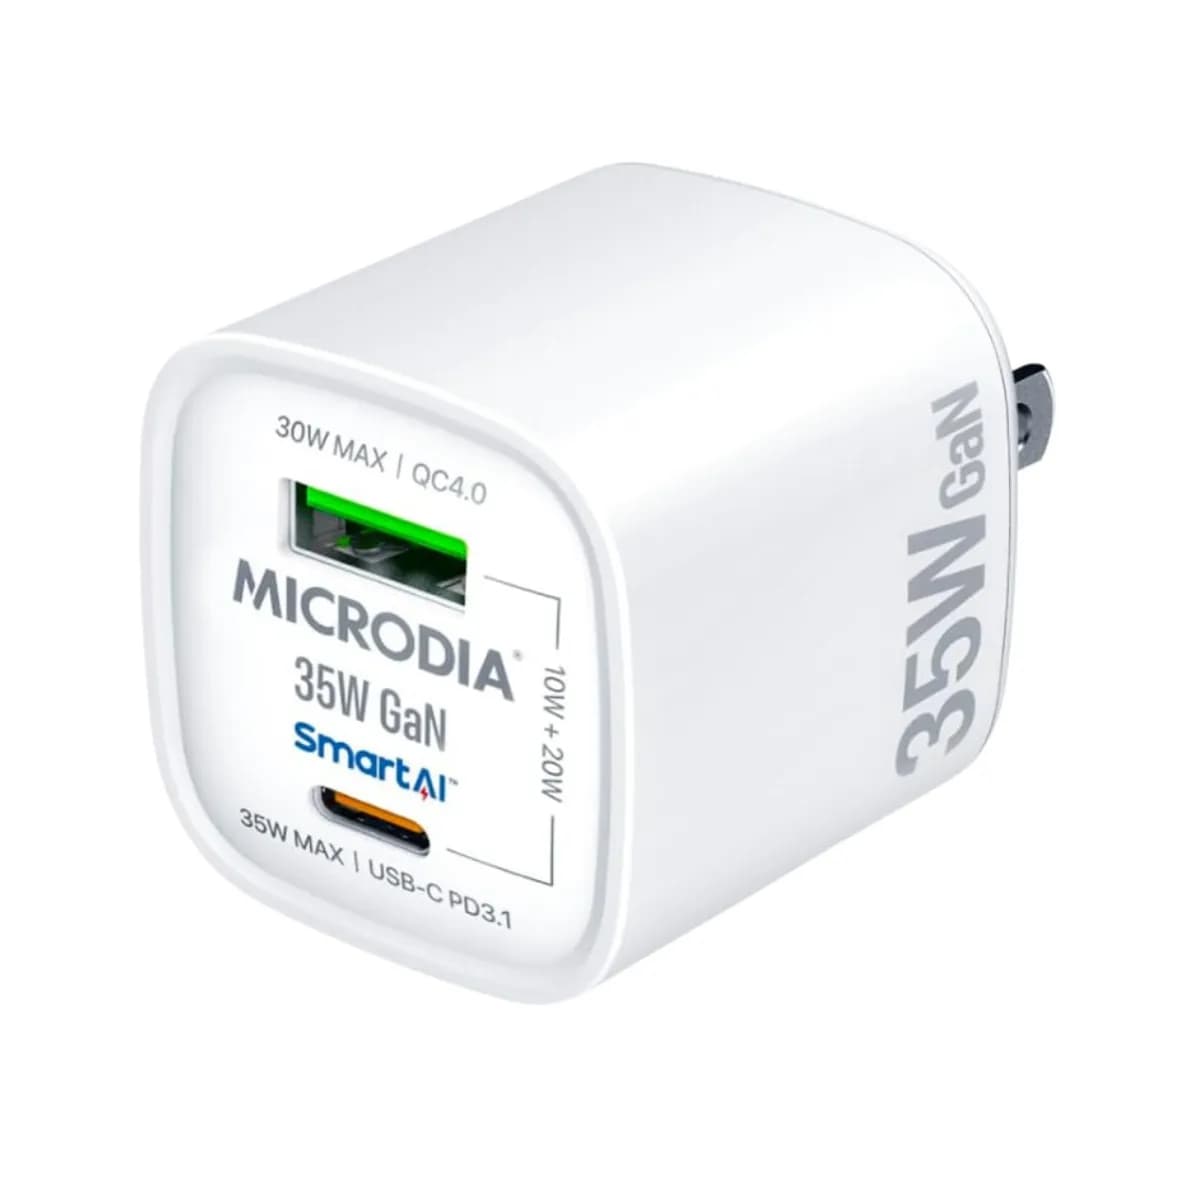 Microdia Nano Wall Charger 35W 2Port 1USB-C & 1USB-A Adapter White